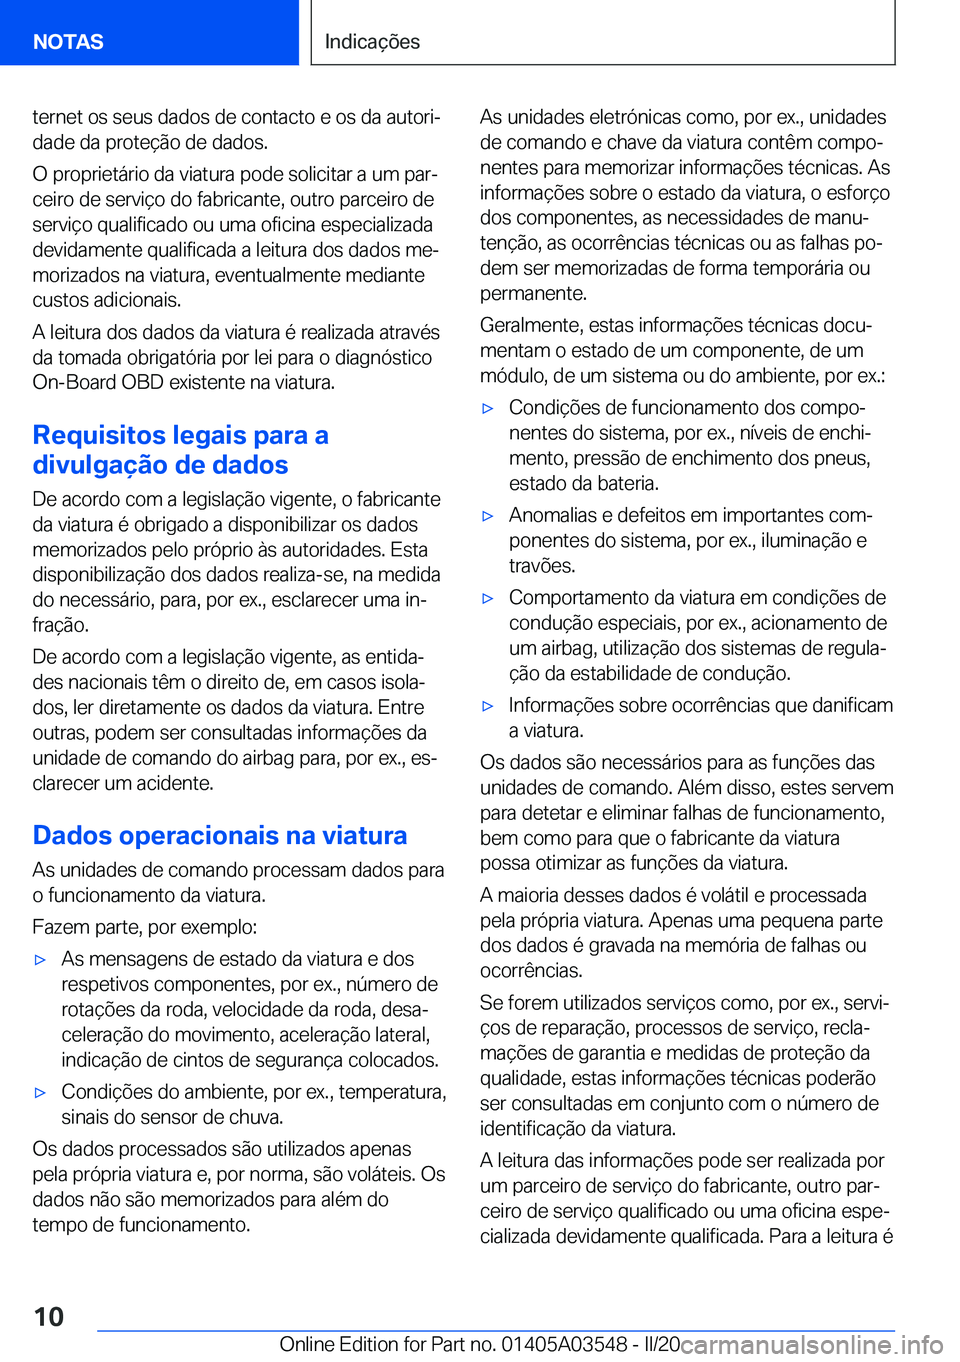 BMW X3 PLUG IN HYBRID 2020  Manual do condutor (in Portuguese) �t�e�r�n�e�t��o�s��s�e�u�s��d�a�d�o�s��d�e��c�o�n�t�a�c�t�o��e��o�s��d�a��a�u�t�o�r�iª
�d�a�d�e��d�a��p�r�o�t�e�